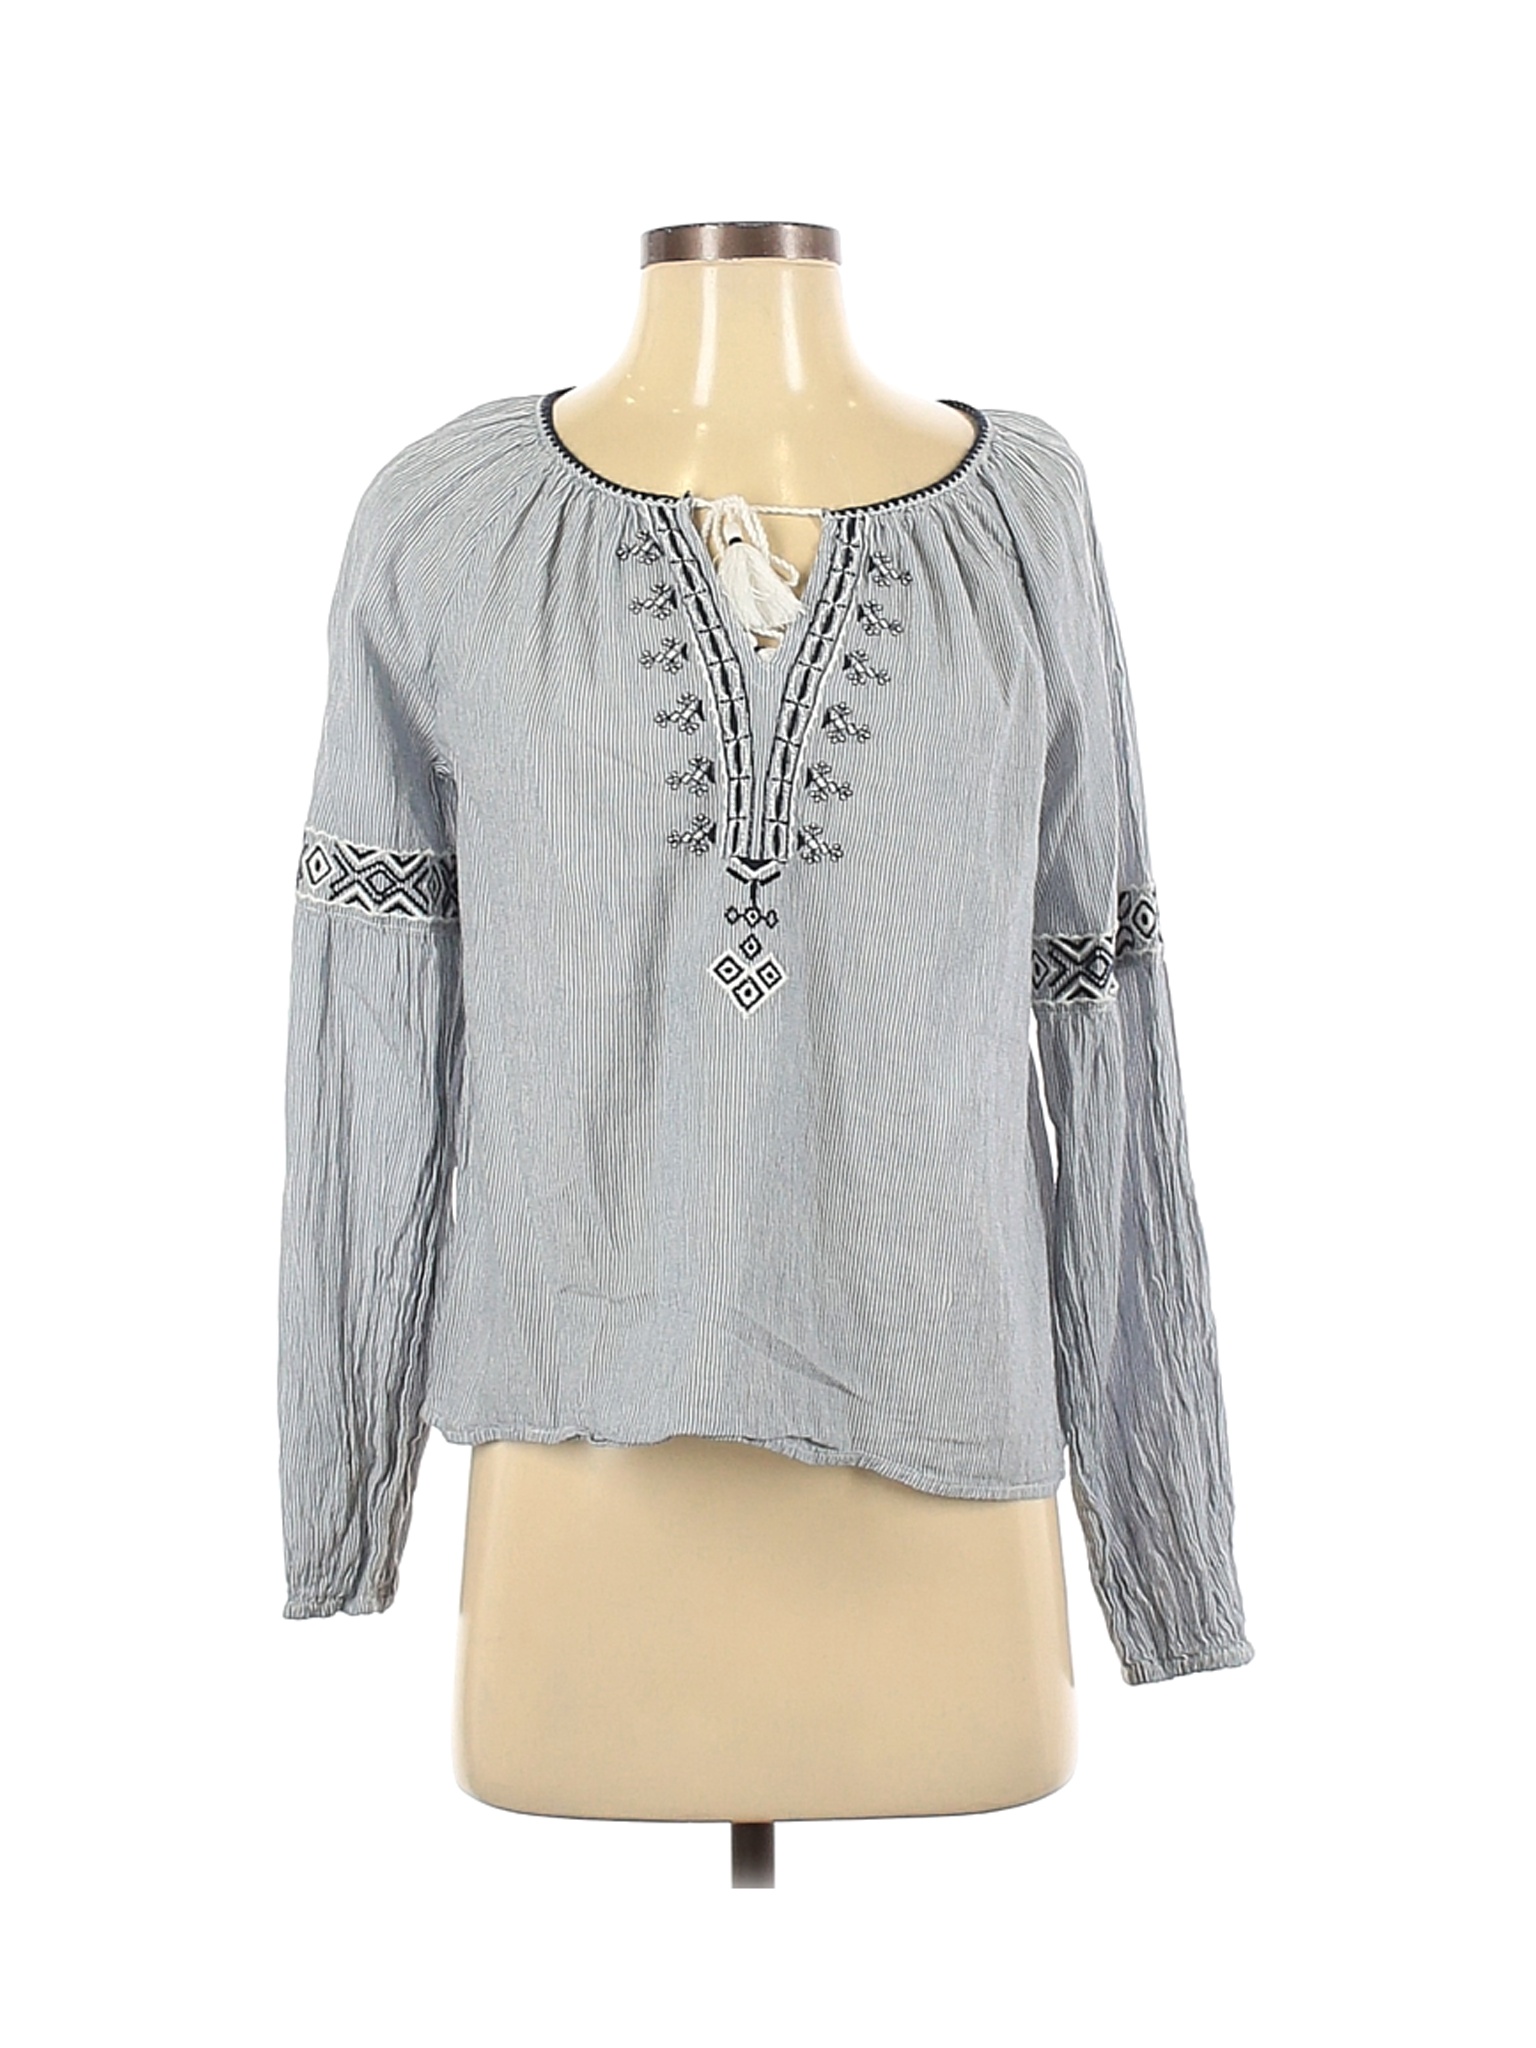 Abercrombie & Fitch Women Gray Long Sleeve Blouse S | eBay